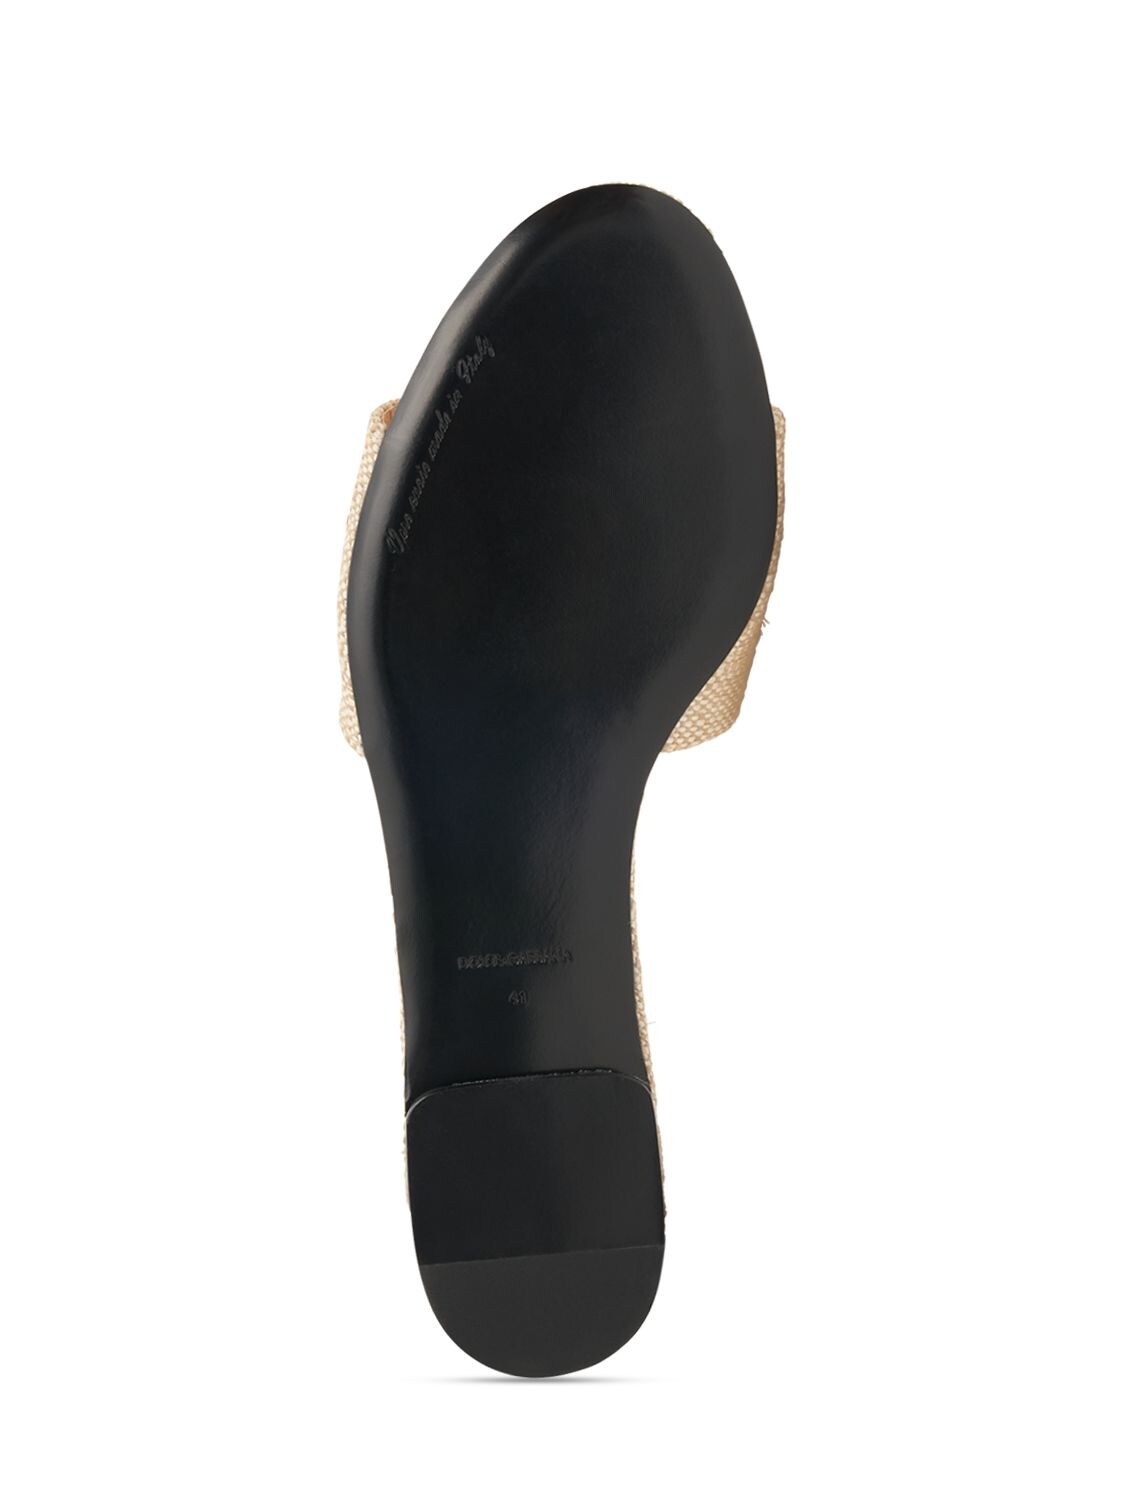 Shop Dolce & Gabbana Bianca Raffia Effect Slide Sandals In Beige